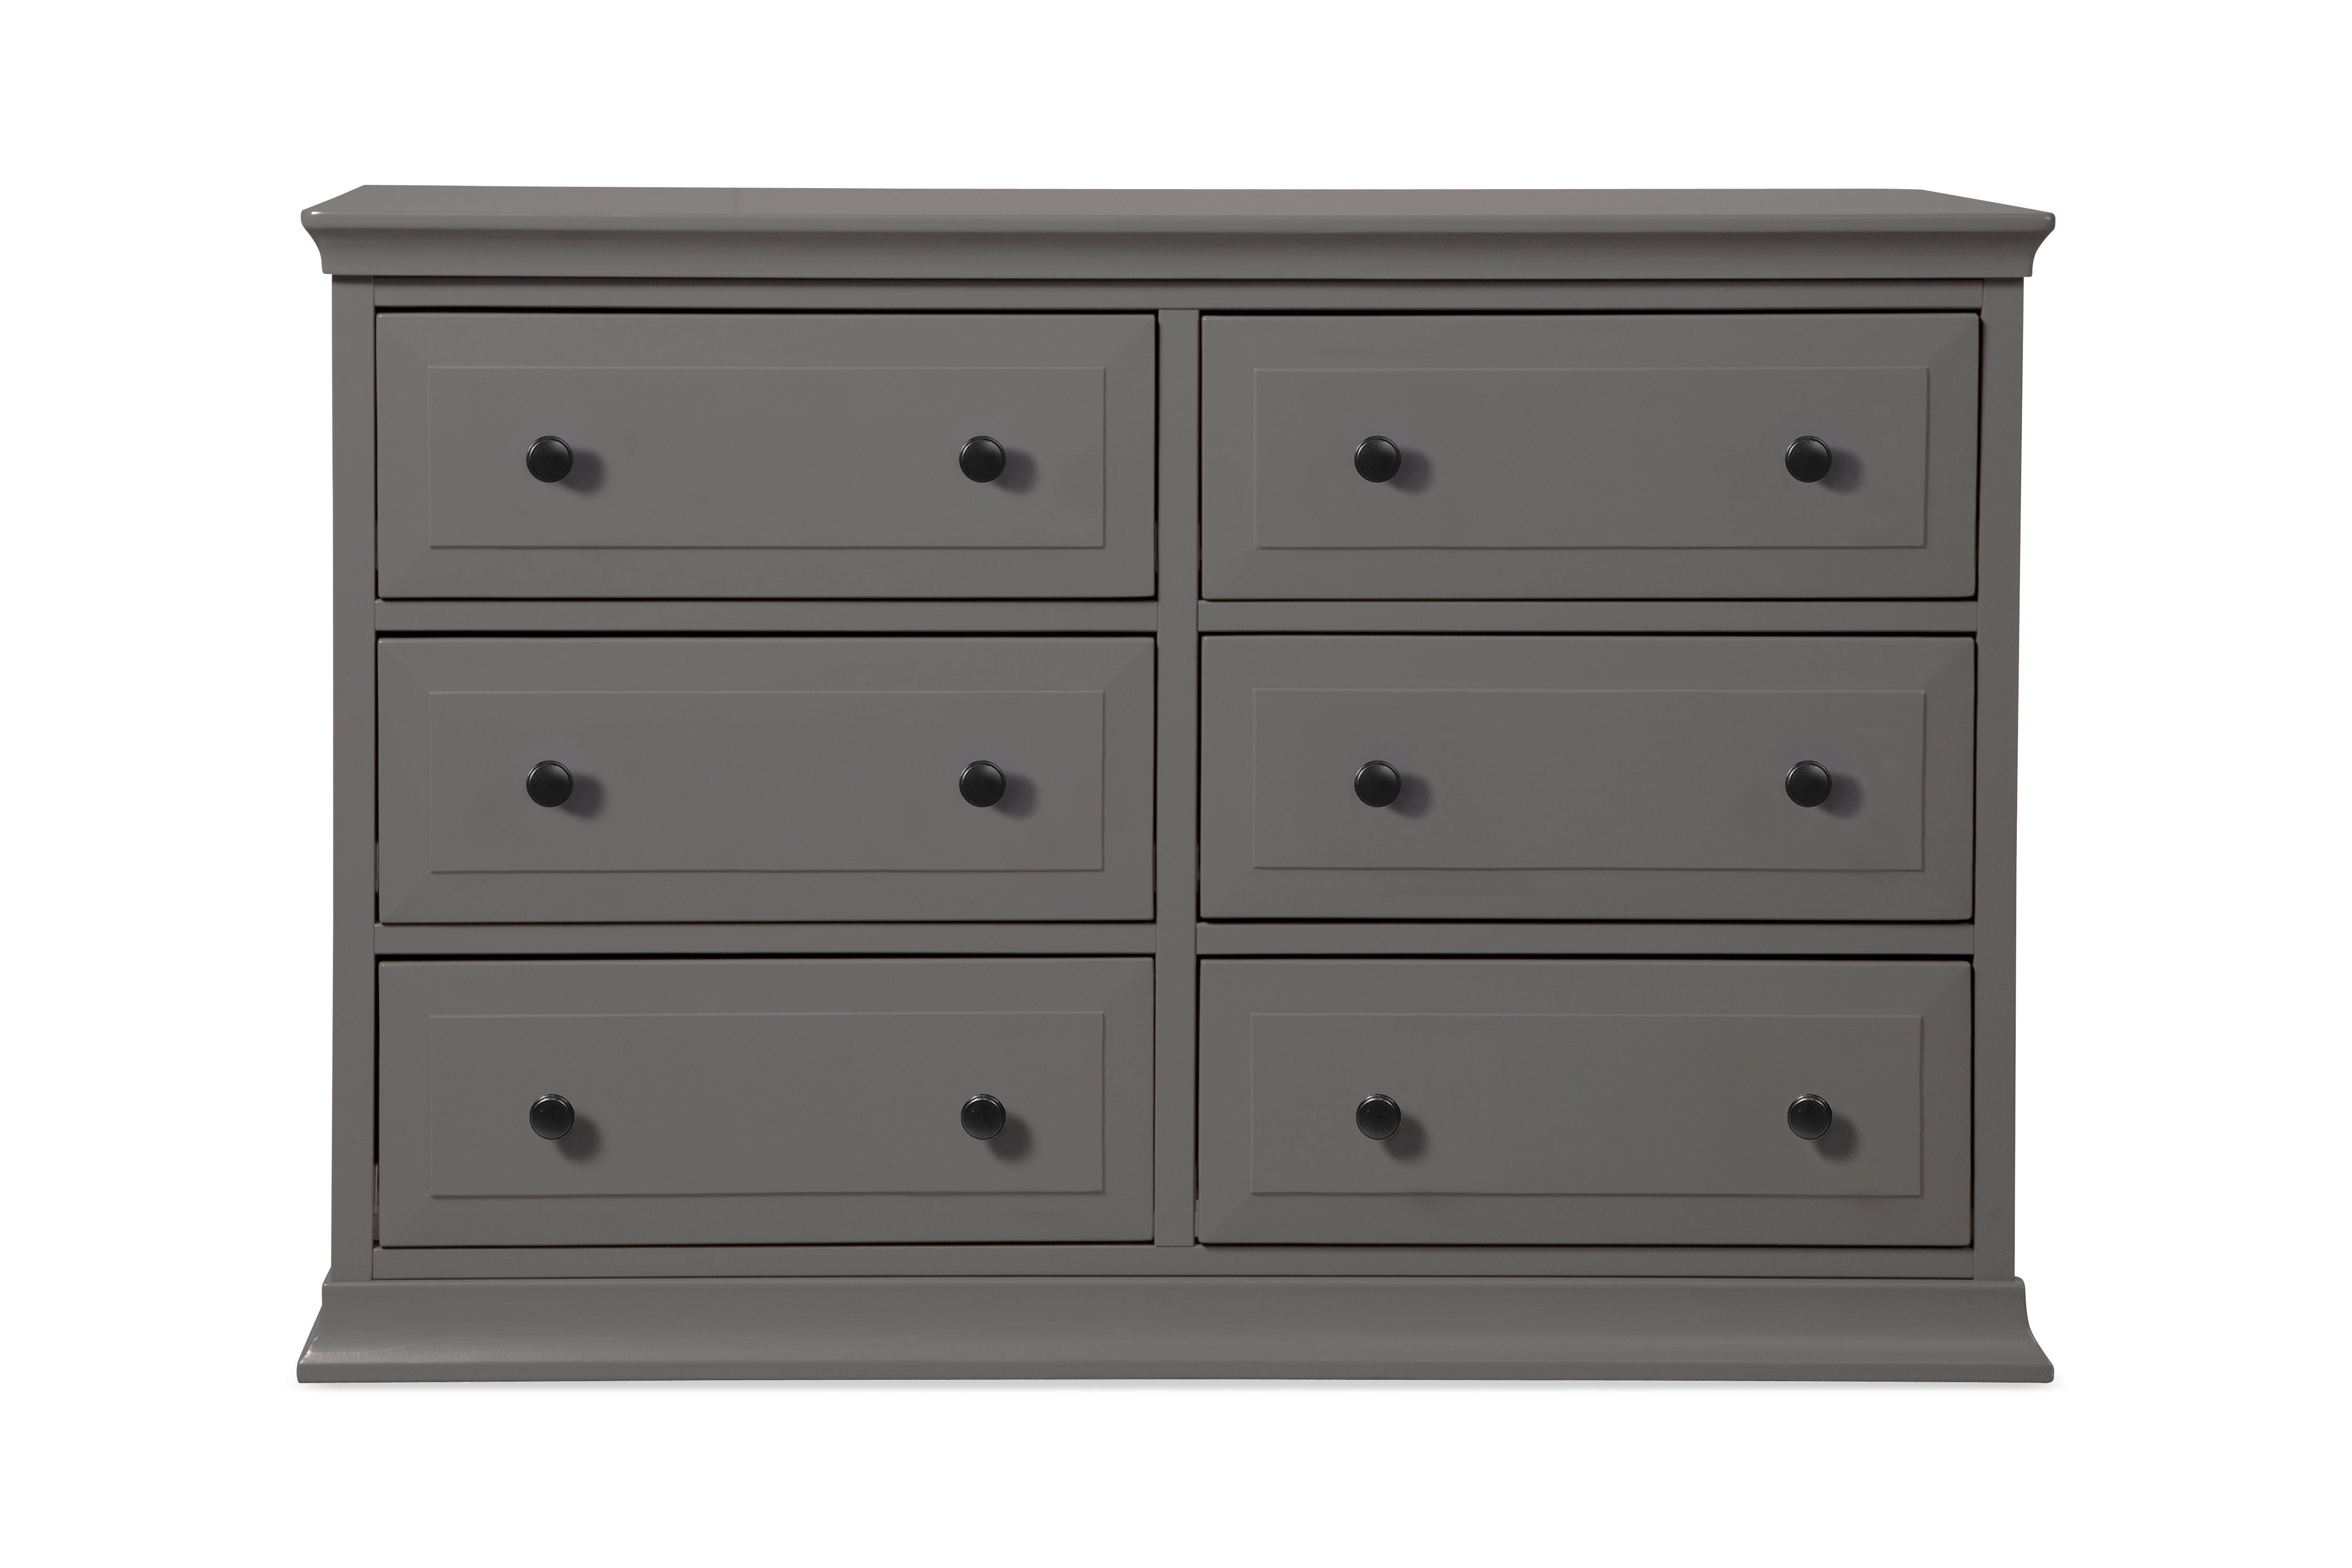 DaVinci Signature 6-Drawer Double Dresser in Slate - image 3 of 5